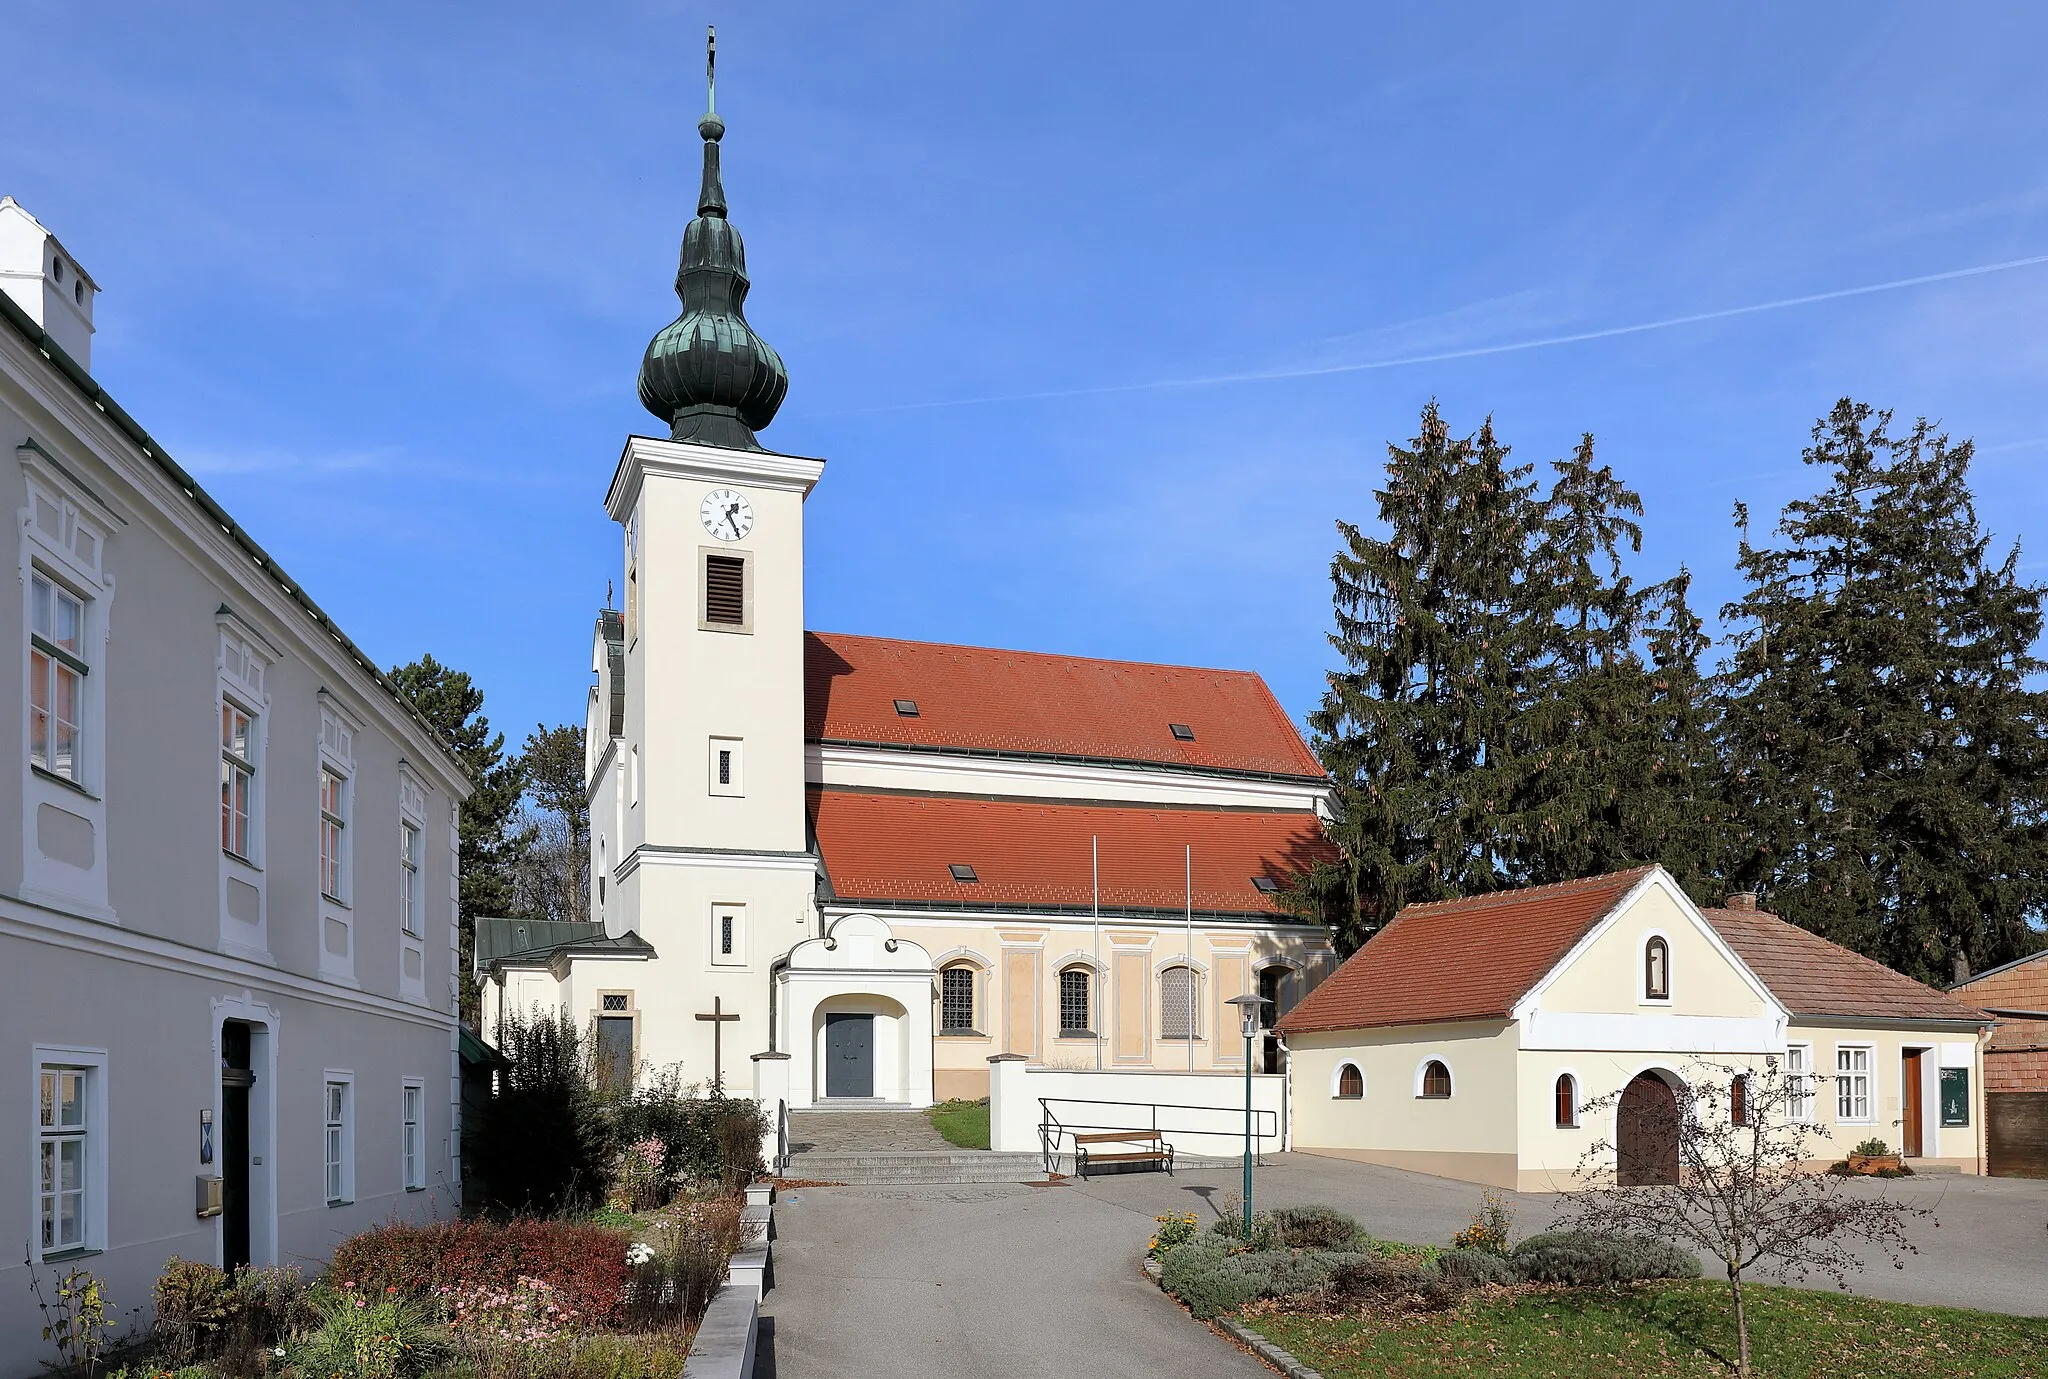 Photo showing: Parish church in Hagenberg, Lower Austria.